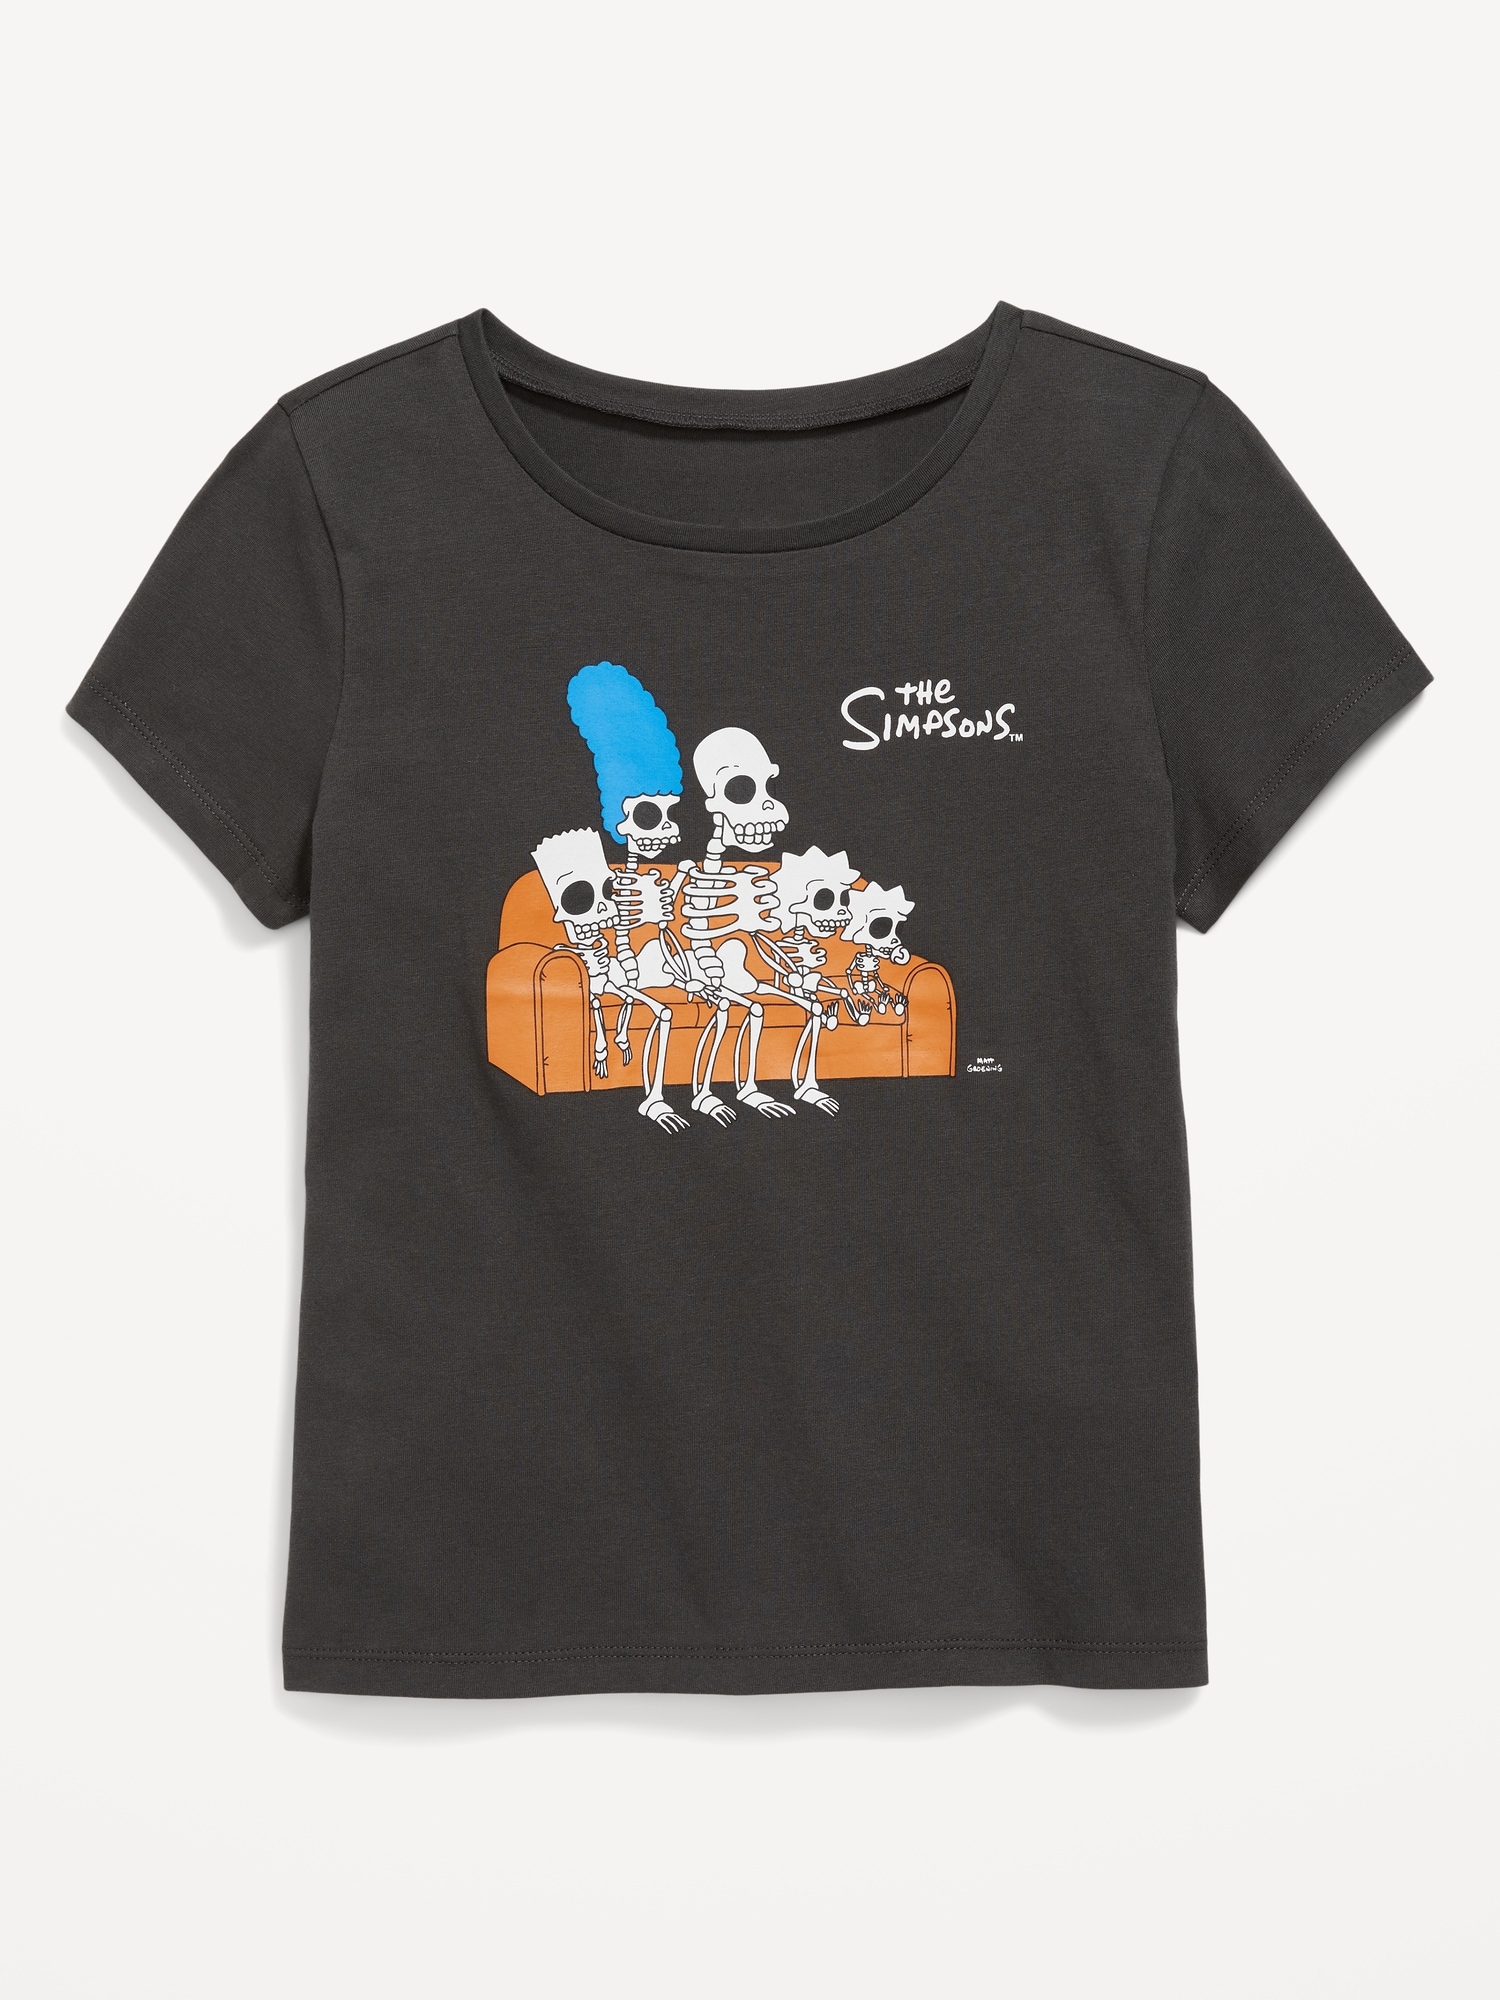 Short-Sleeve Gender-Neutral Licensed Graphic T-Shirt for Kids